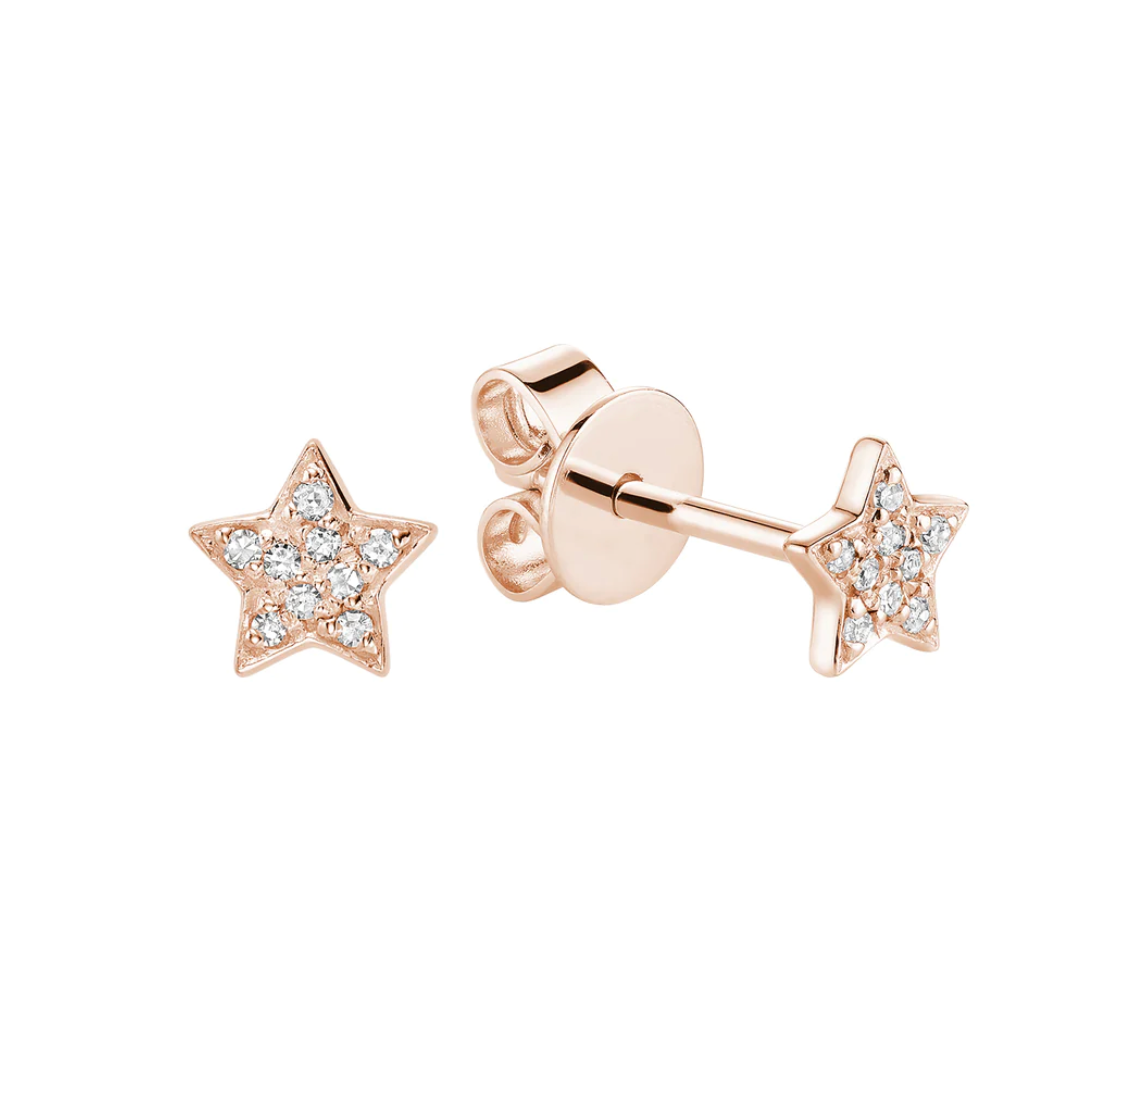 10 Karat Gold Small Star Diamond Stud Earrings